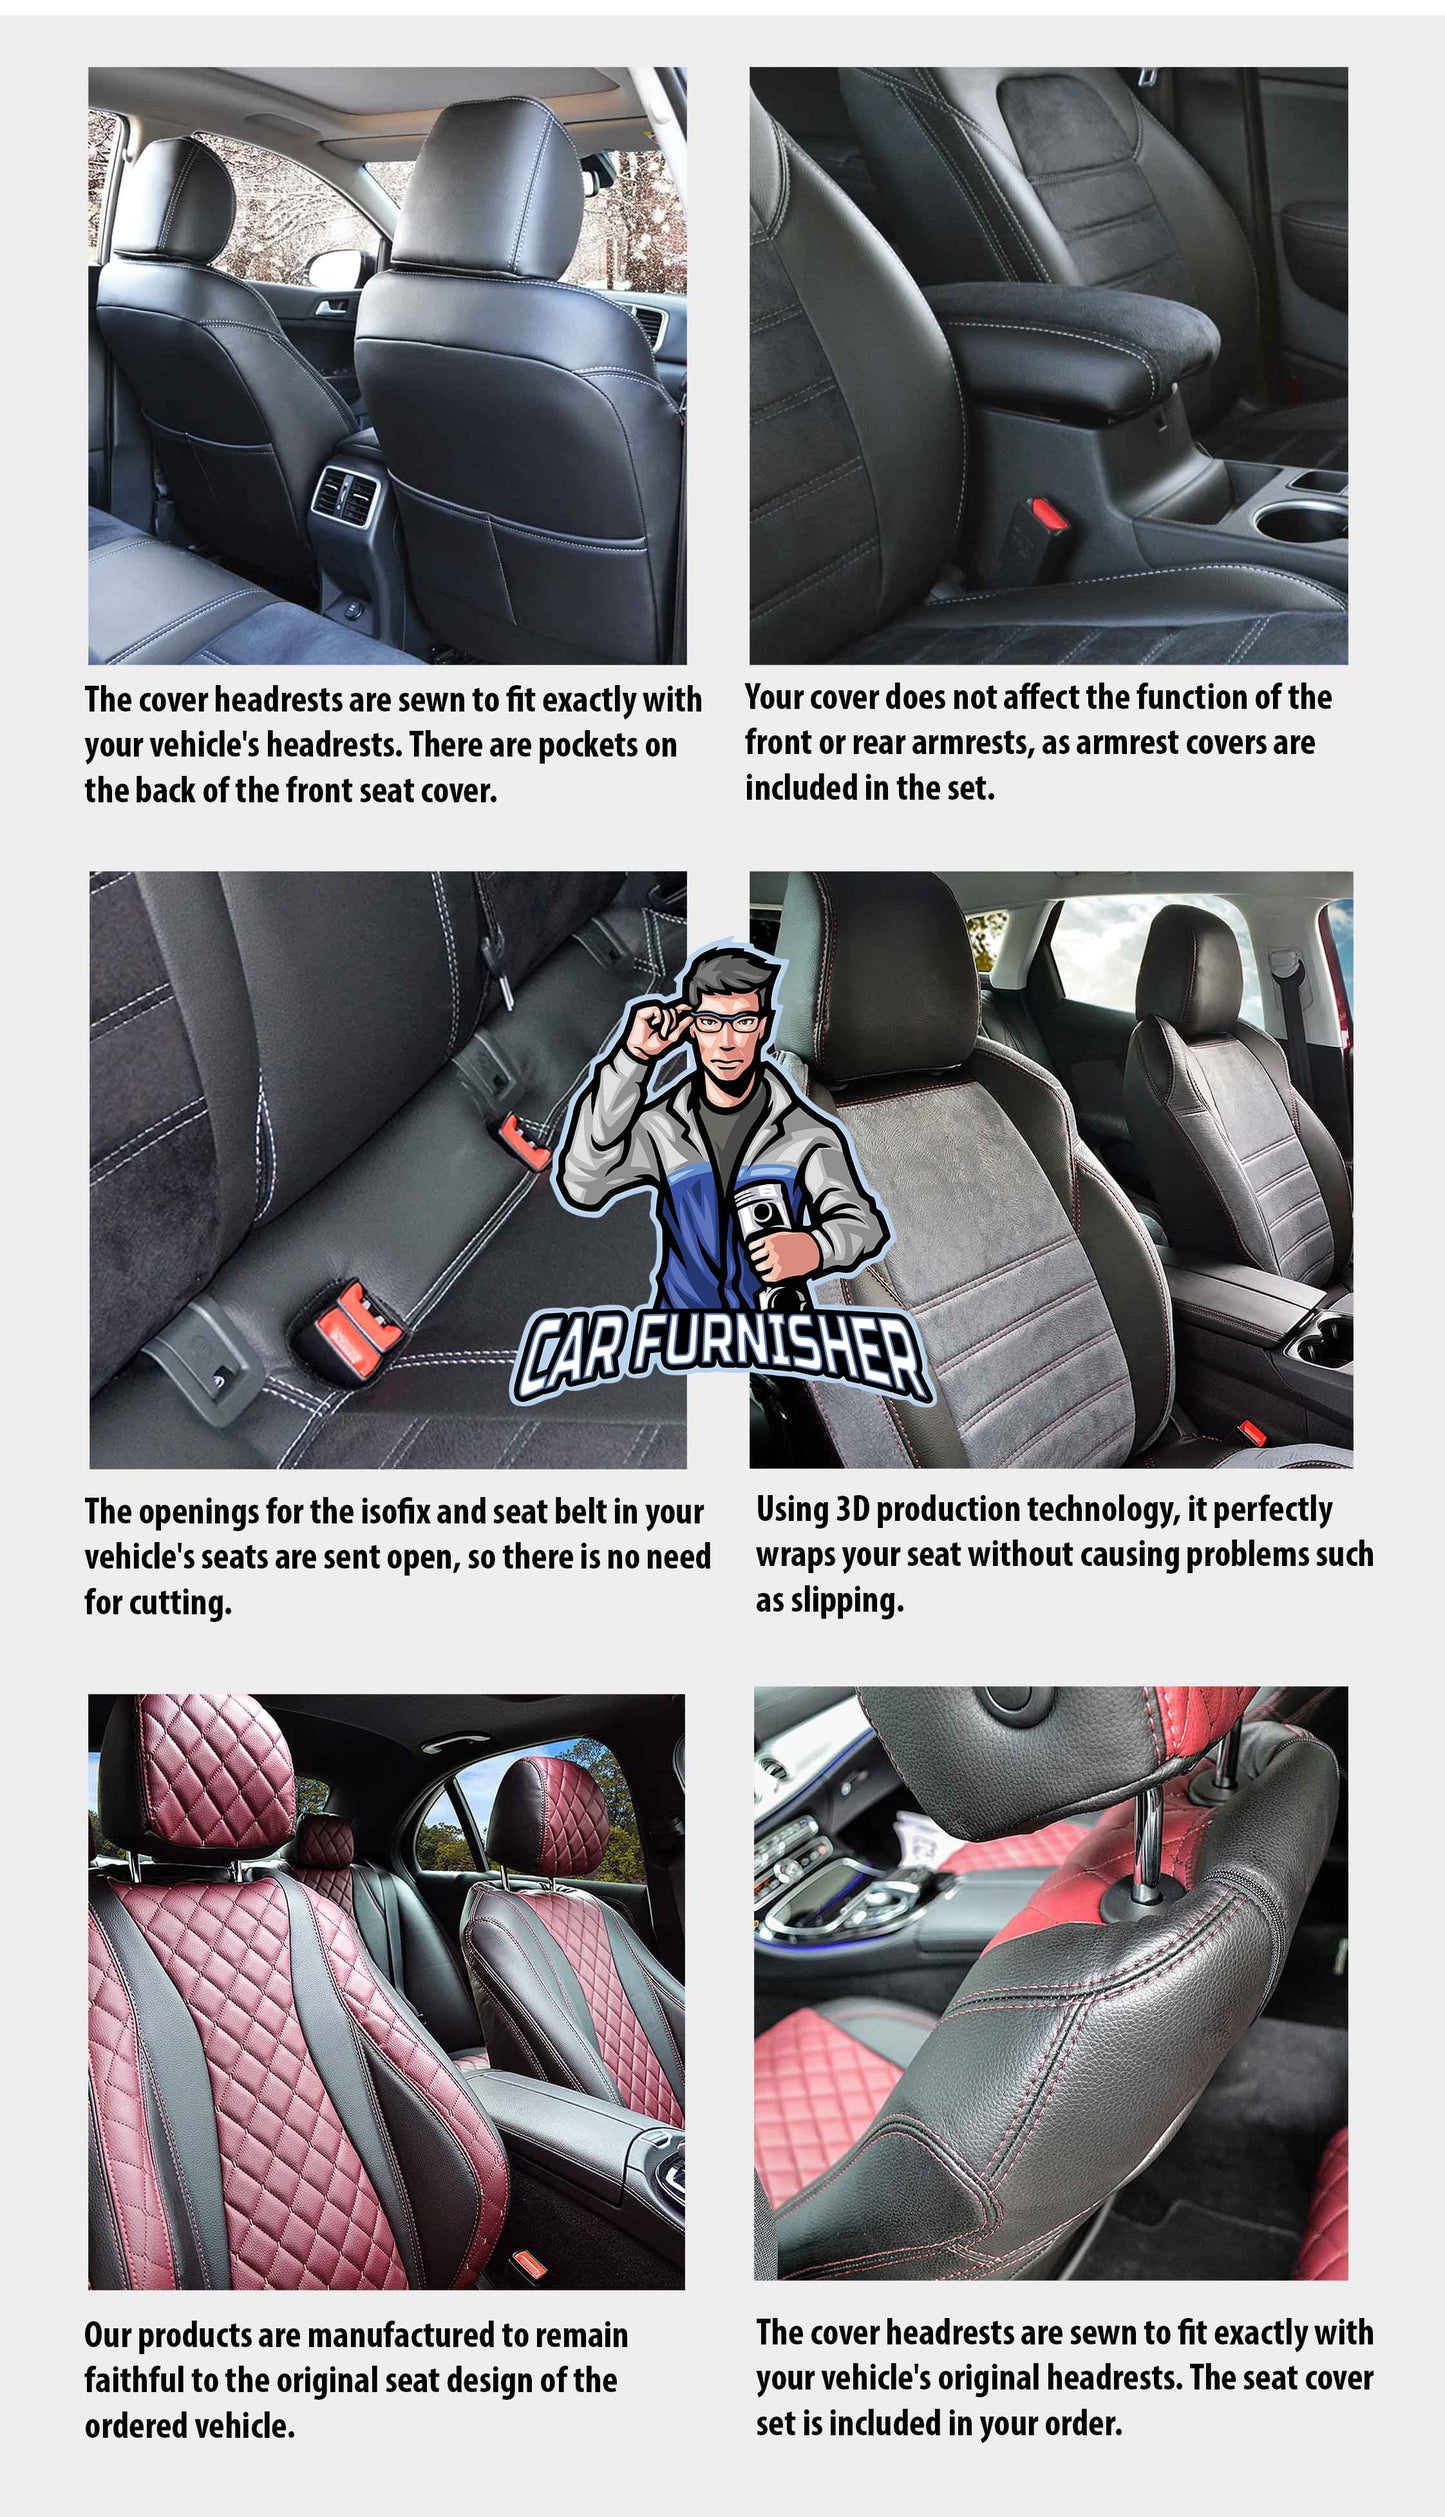 Dacia Sandero Seat Covers Paris Leather & Jacquard Design Beige Leather & Jacquard Fabric